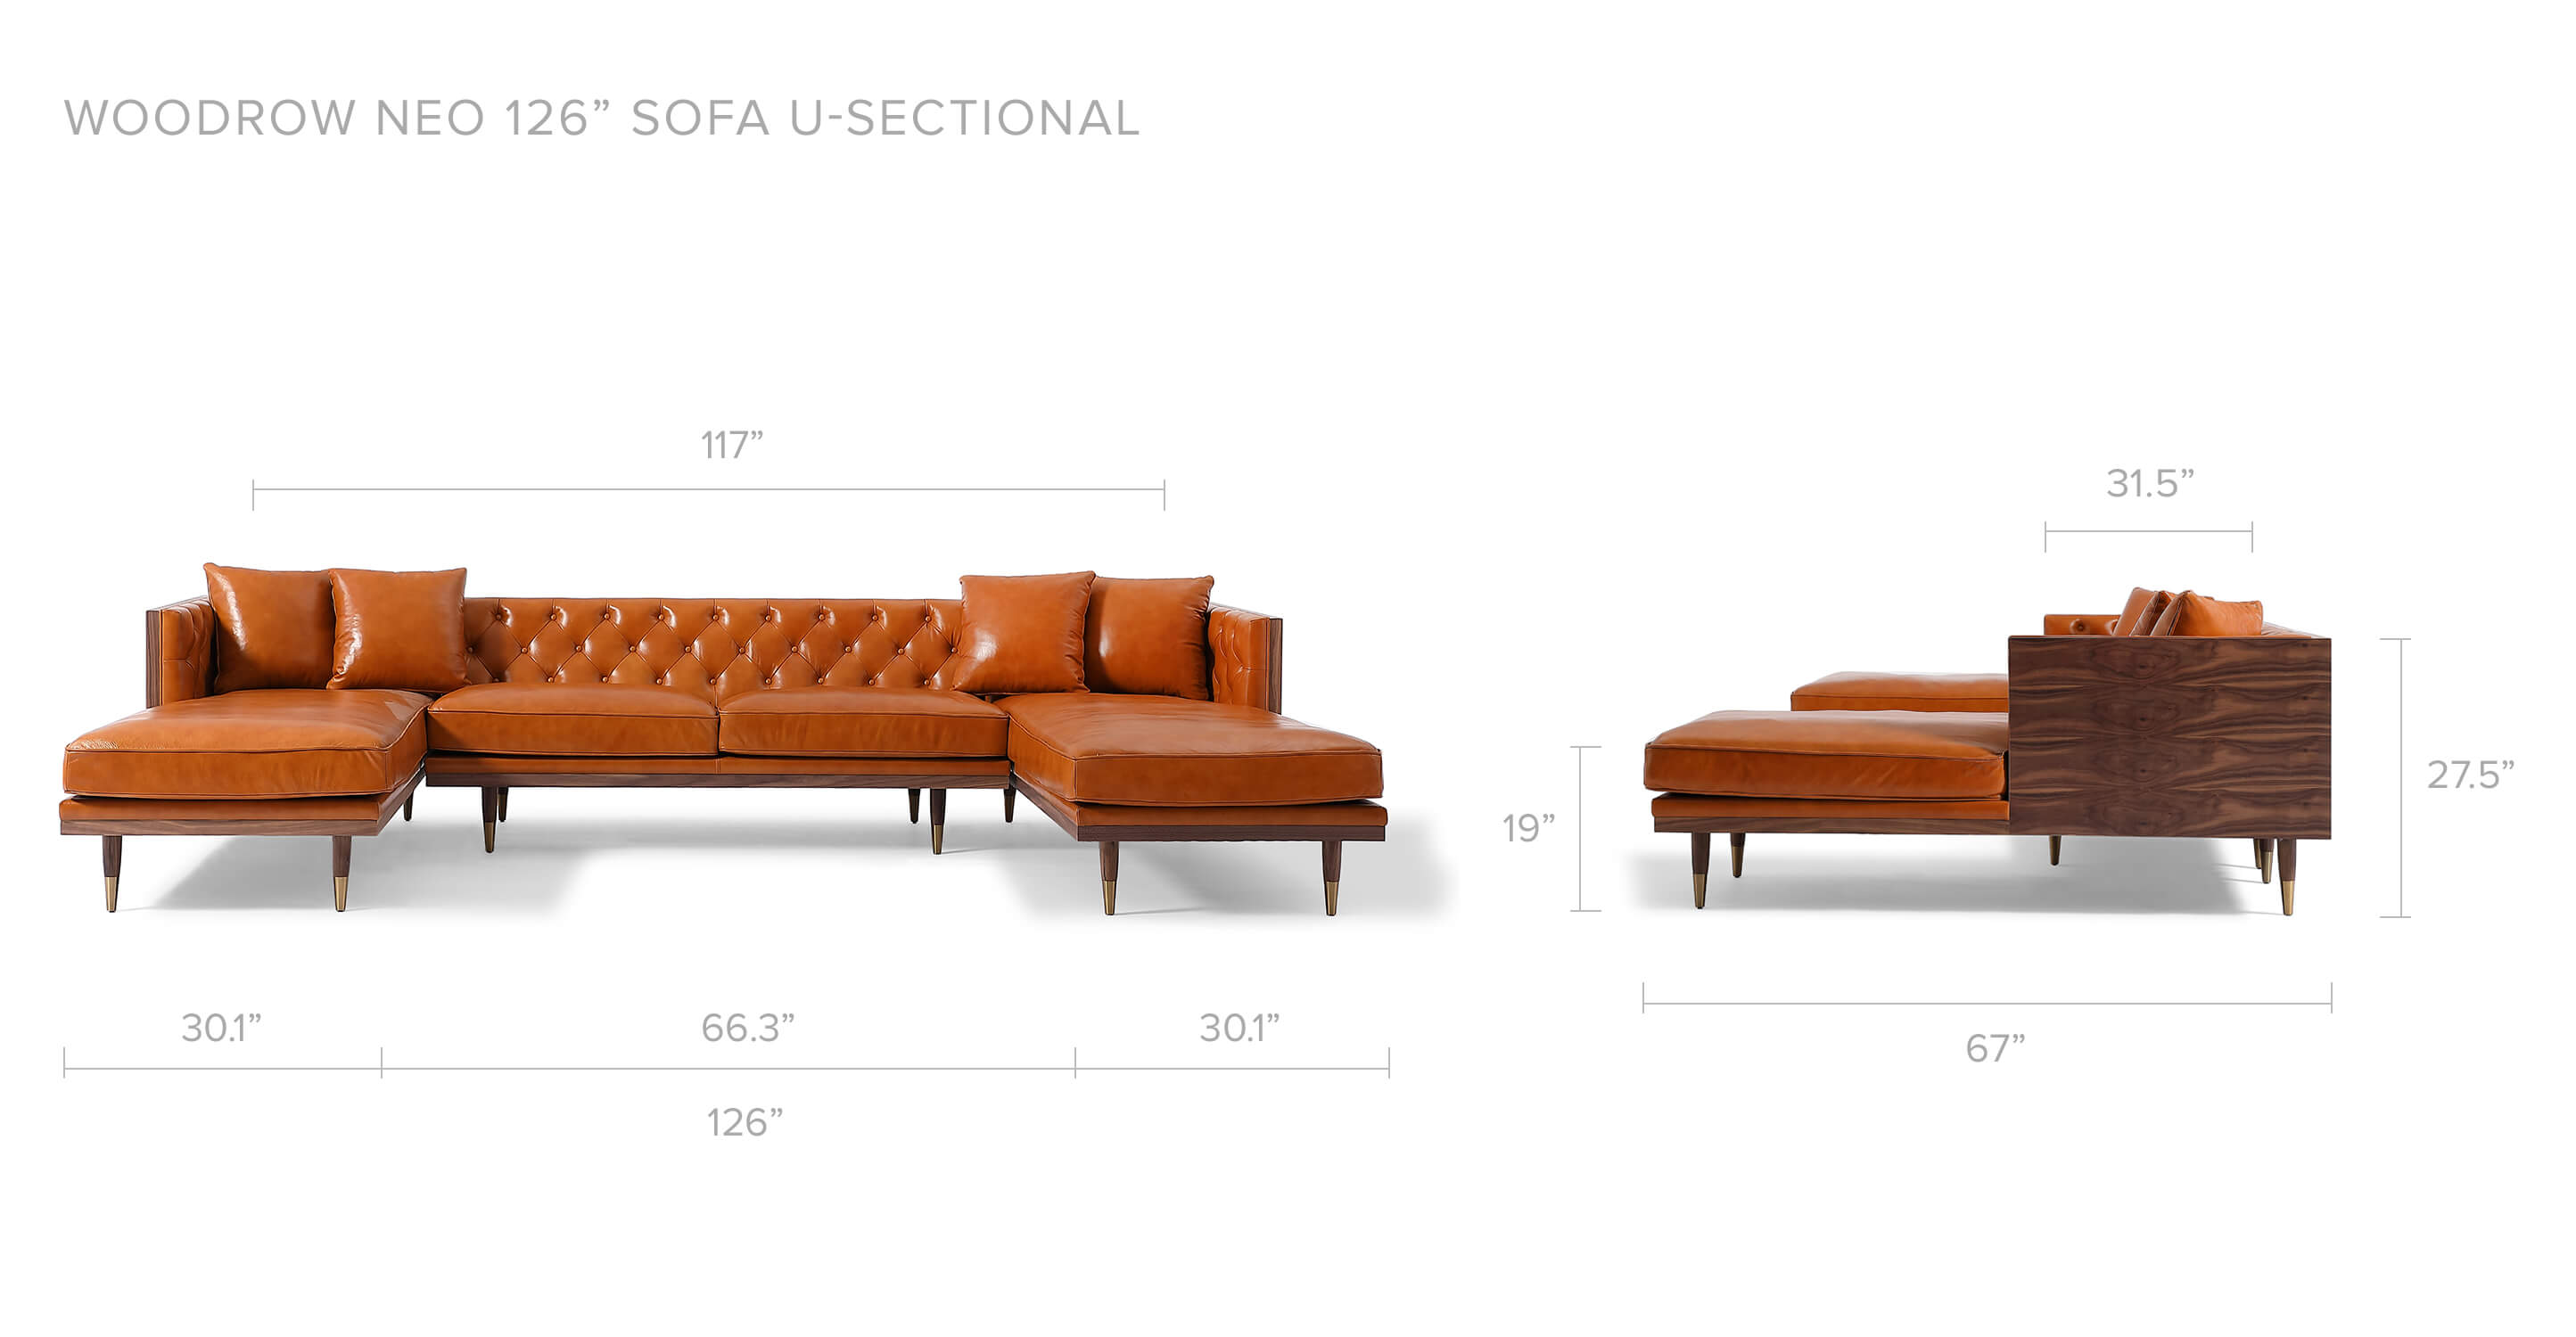 Woodrow Neo 126" Leather Sofa U-Sectional